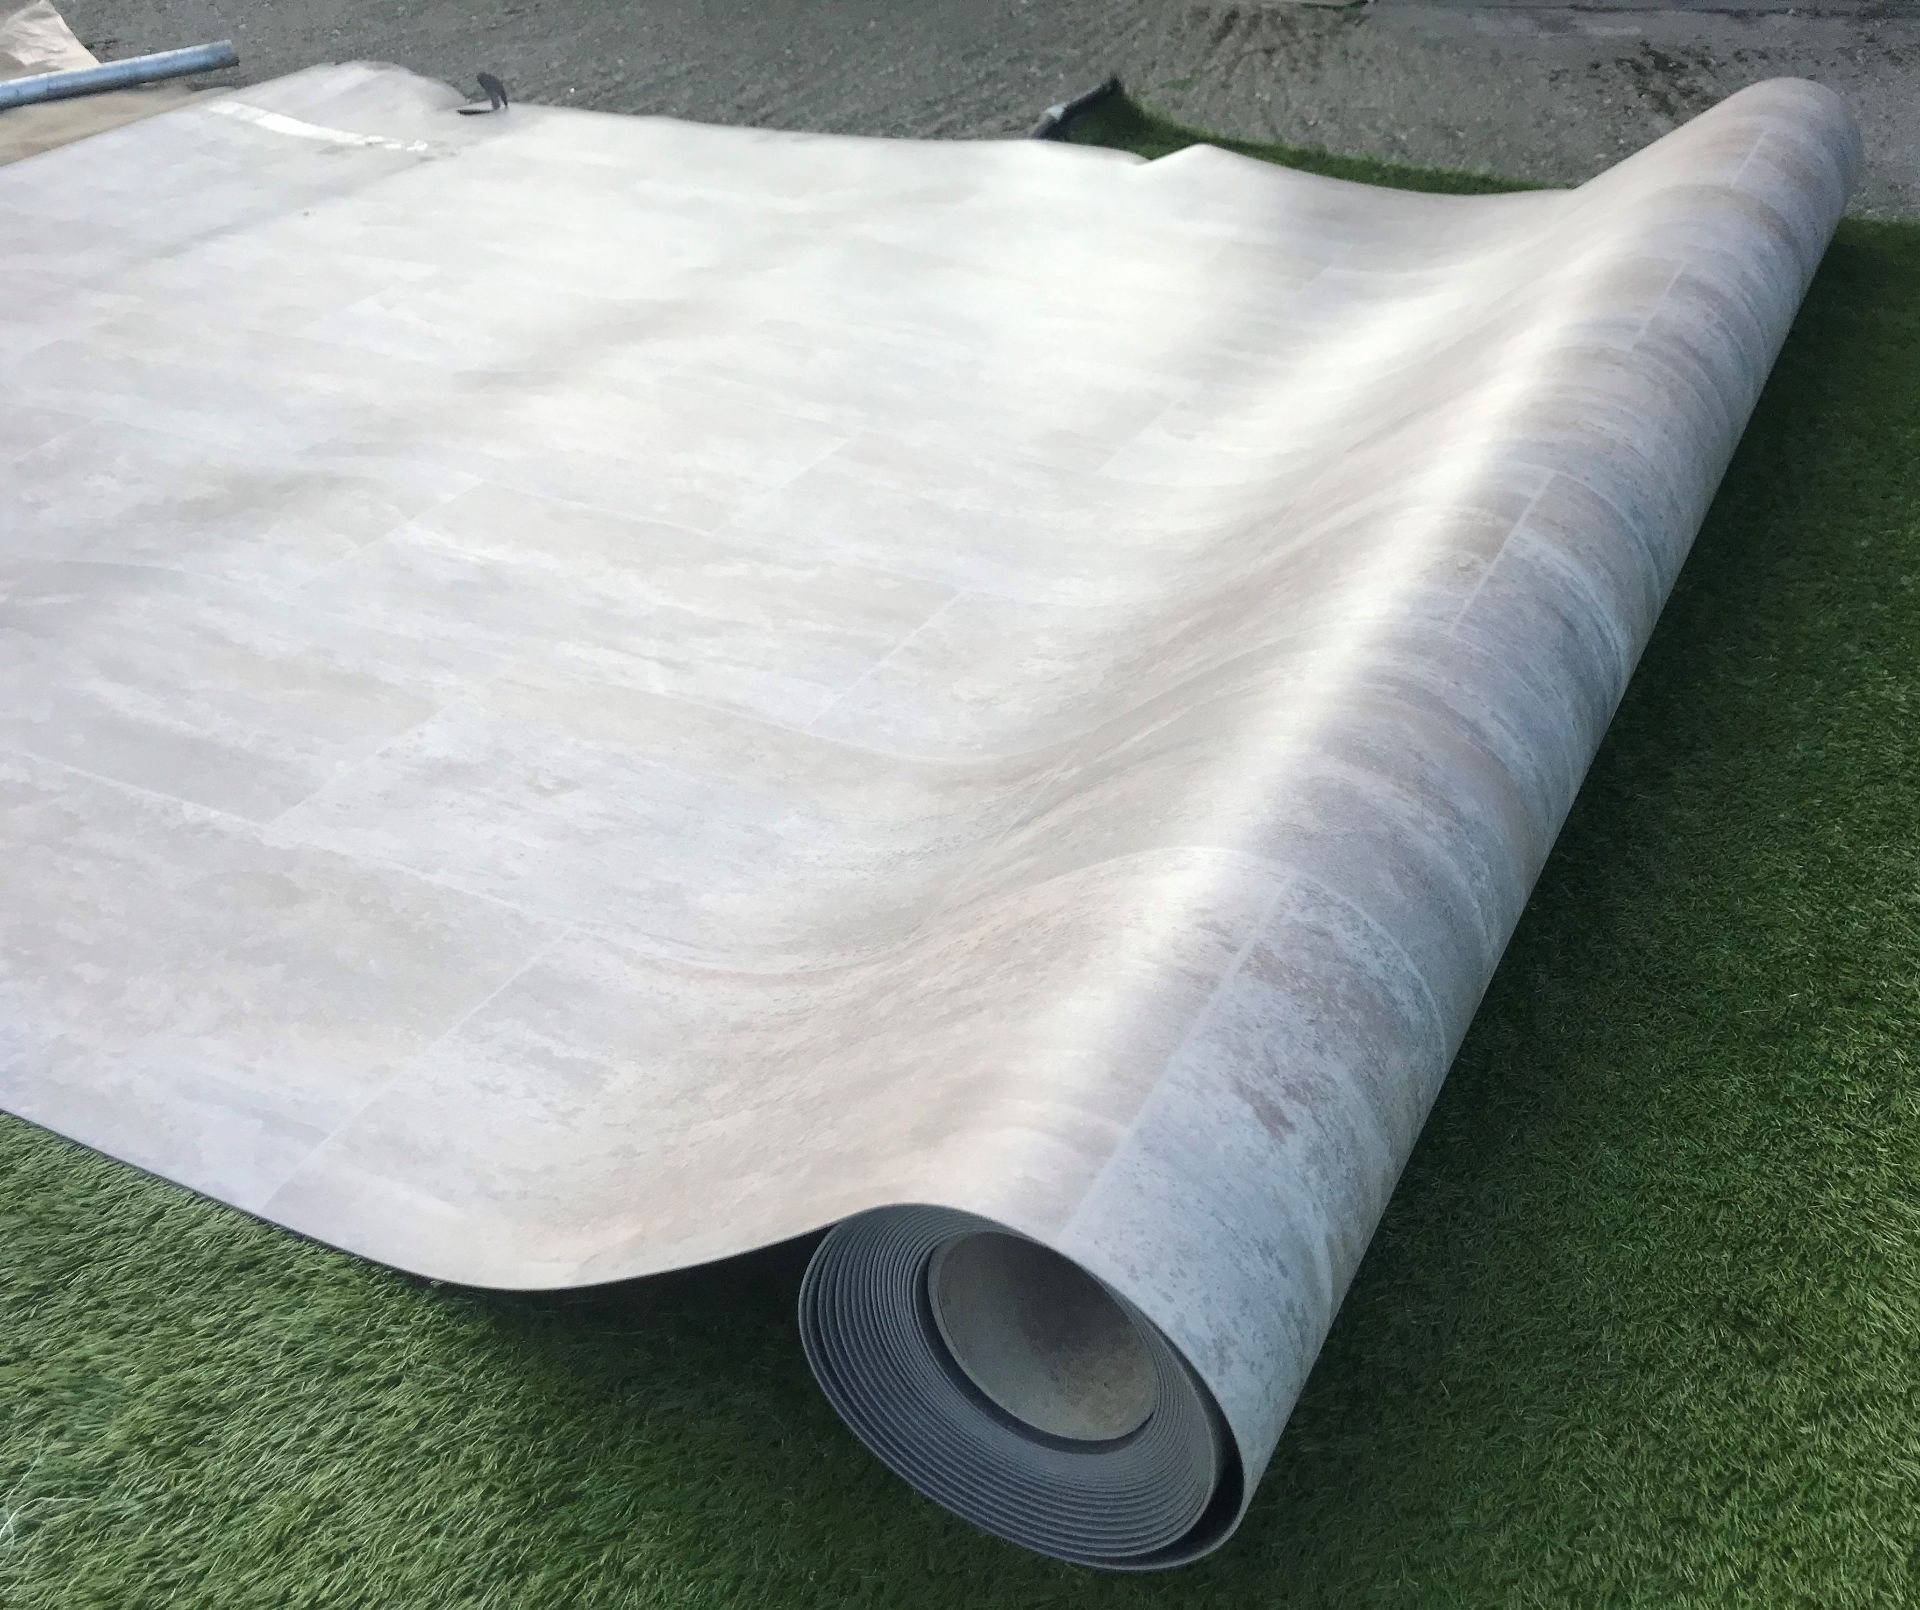 1 x GERFLOR Tarkett Commercial Safety Flooring In Melbourne Tile Design - 10.8X2 Meter Roll - Ref: - Image 3 of 4